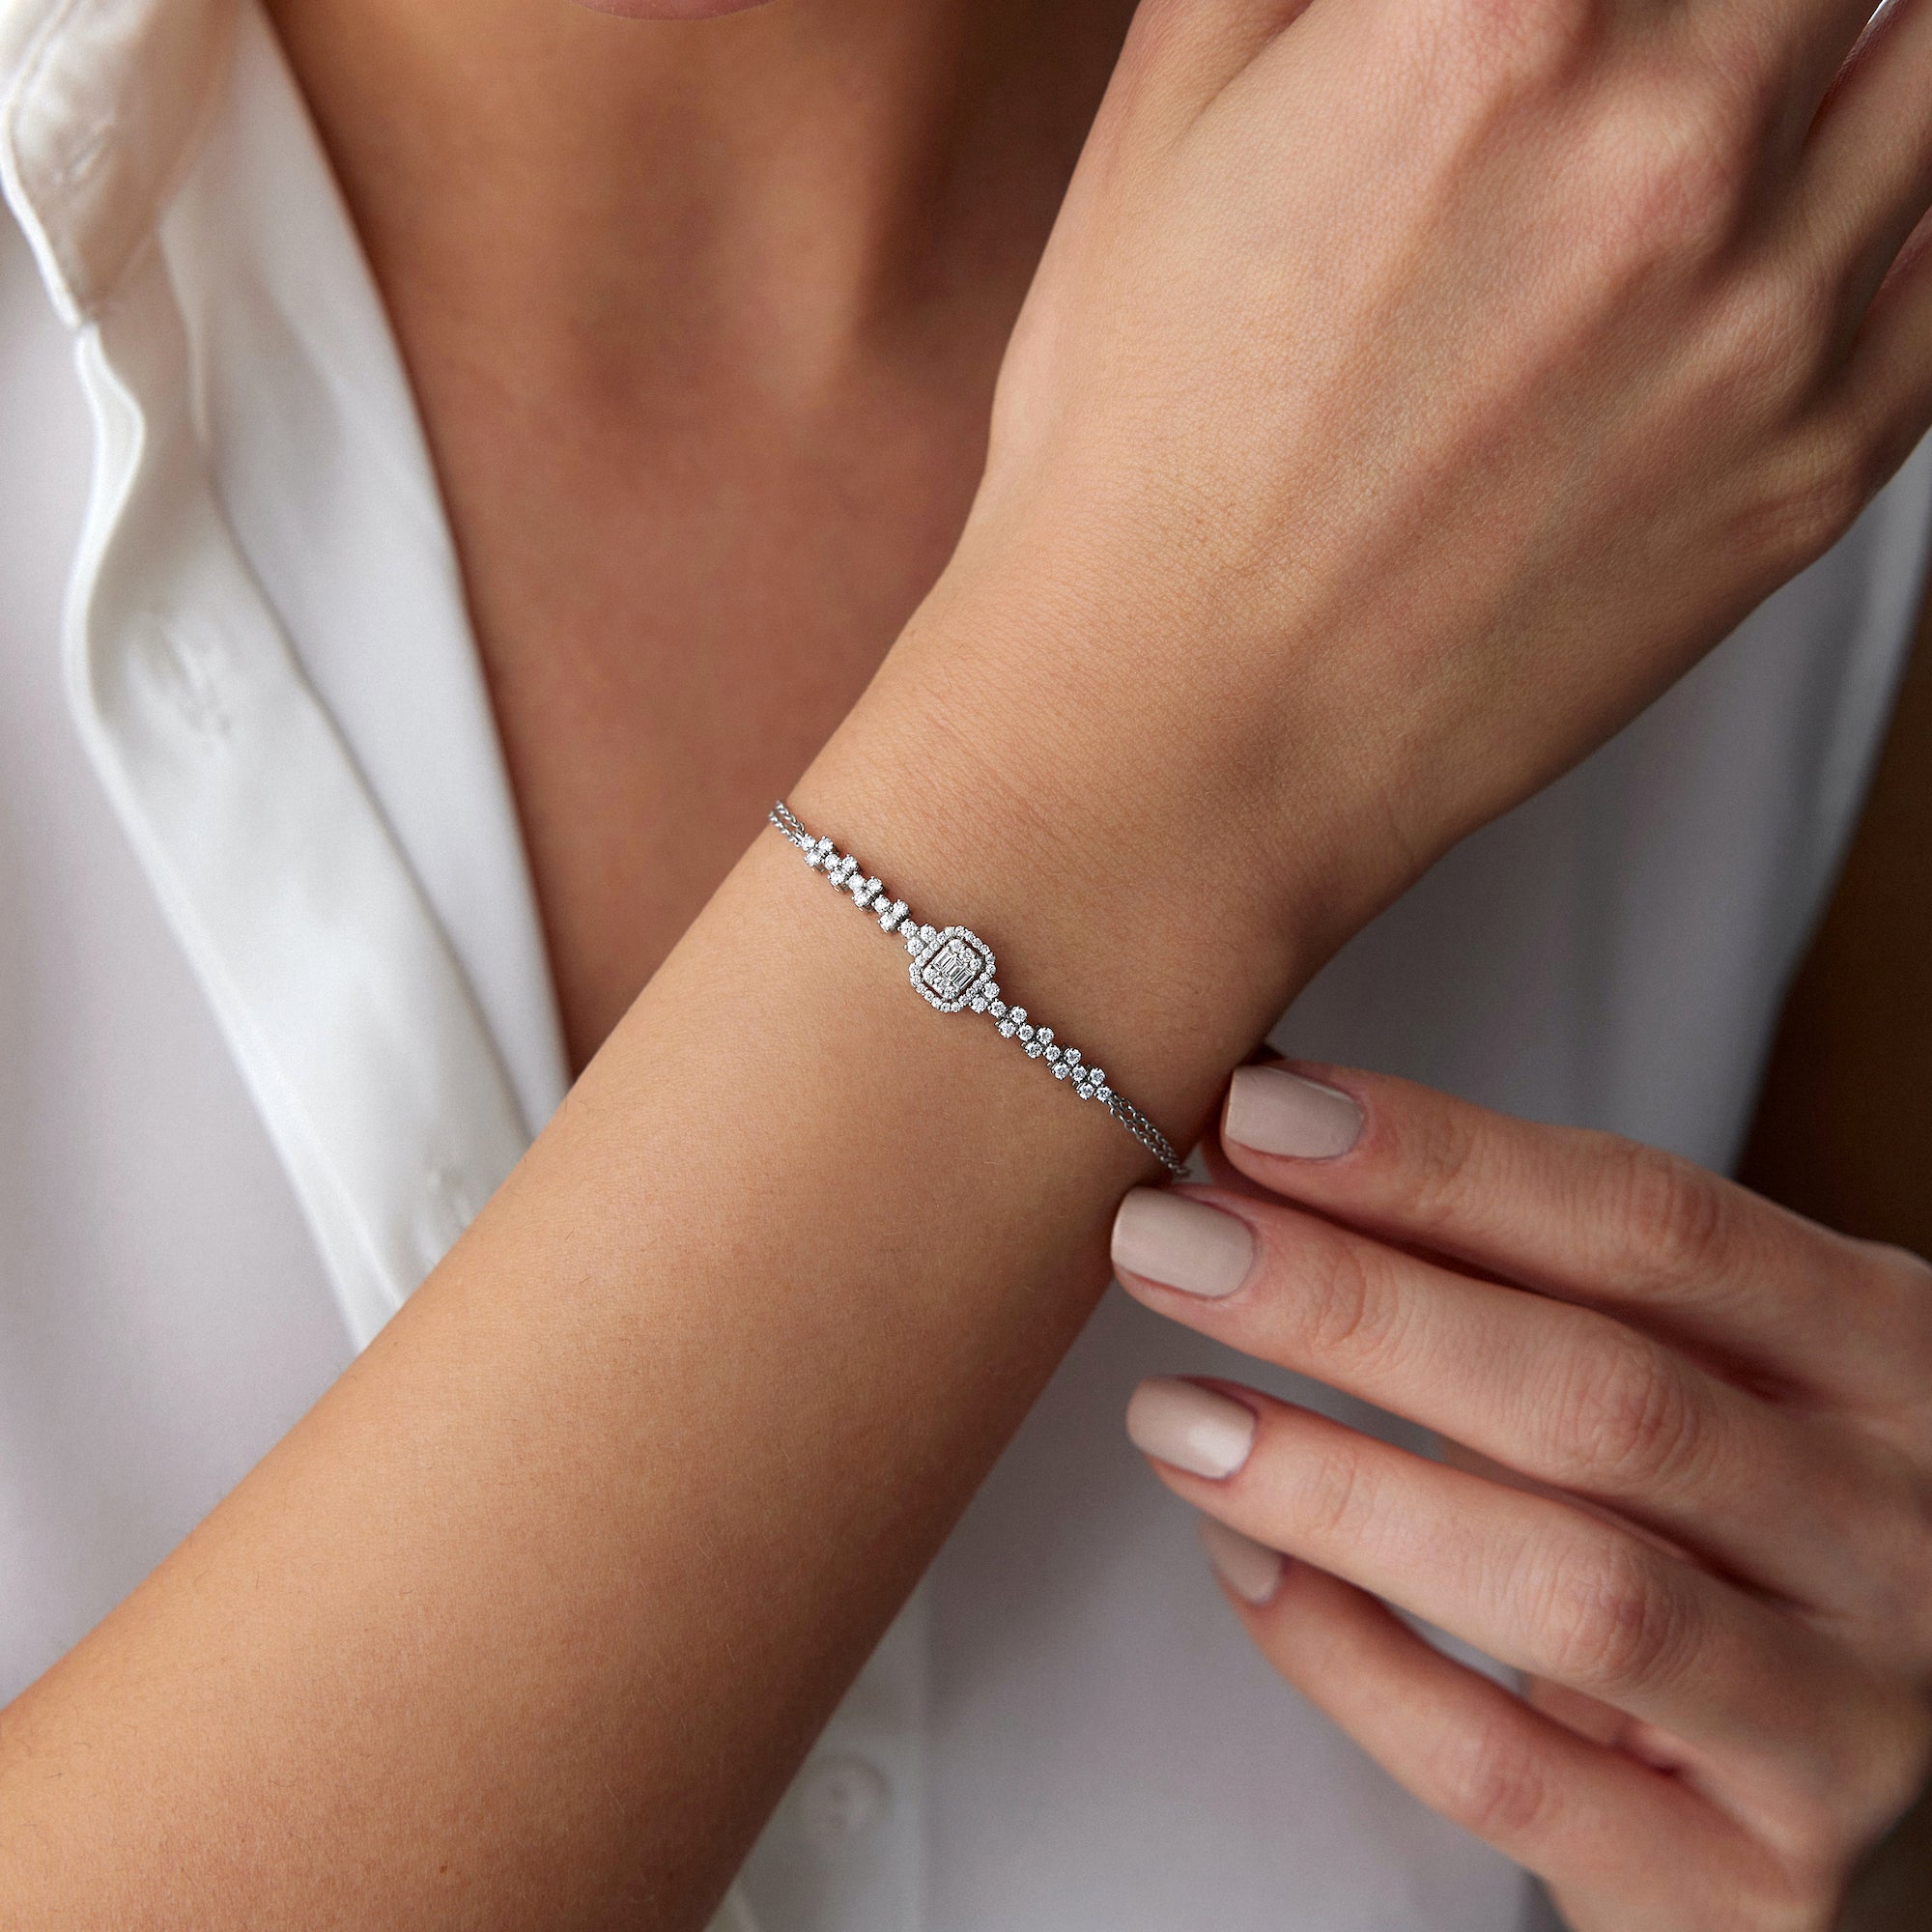 Elegant Double Chain Diamond Bracelet Available in 14K and 18K Gold